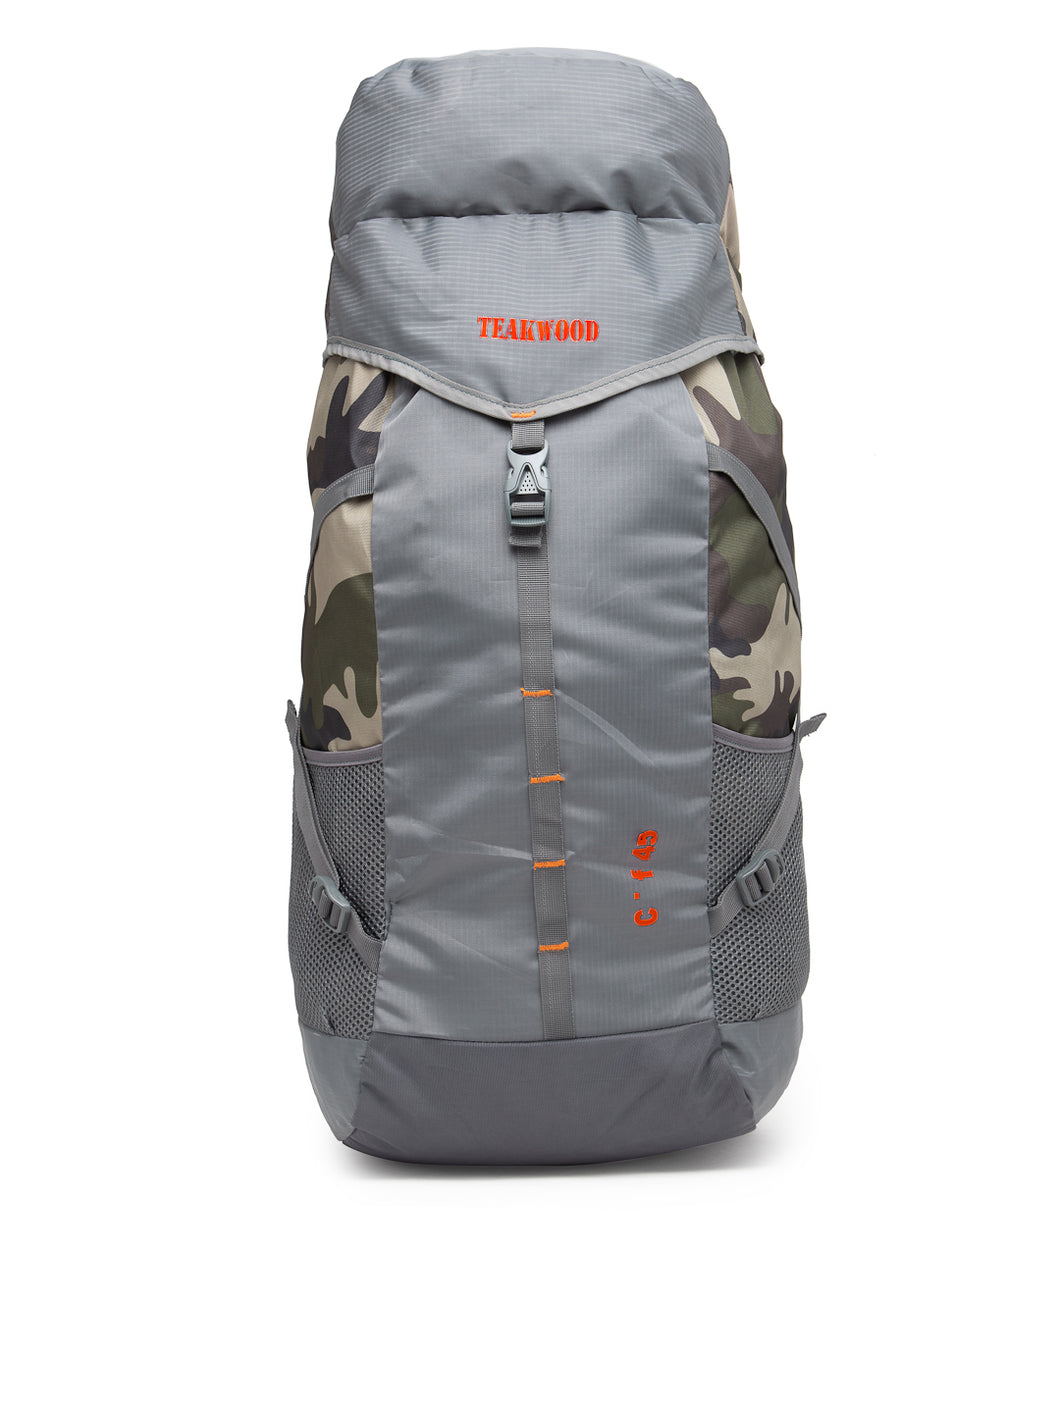 Teakwood Unisex Camouflage Print Travel Backpack with Multiple Pockets||Travel Backpack for Outdoor Sport Camp Hiking Trekking Bag Camping Rucksack